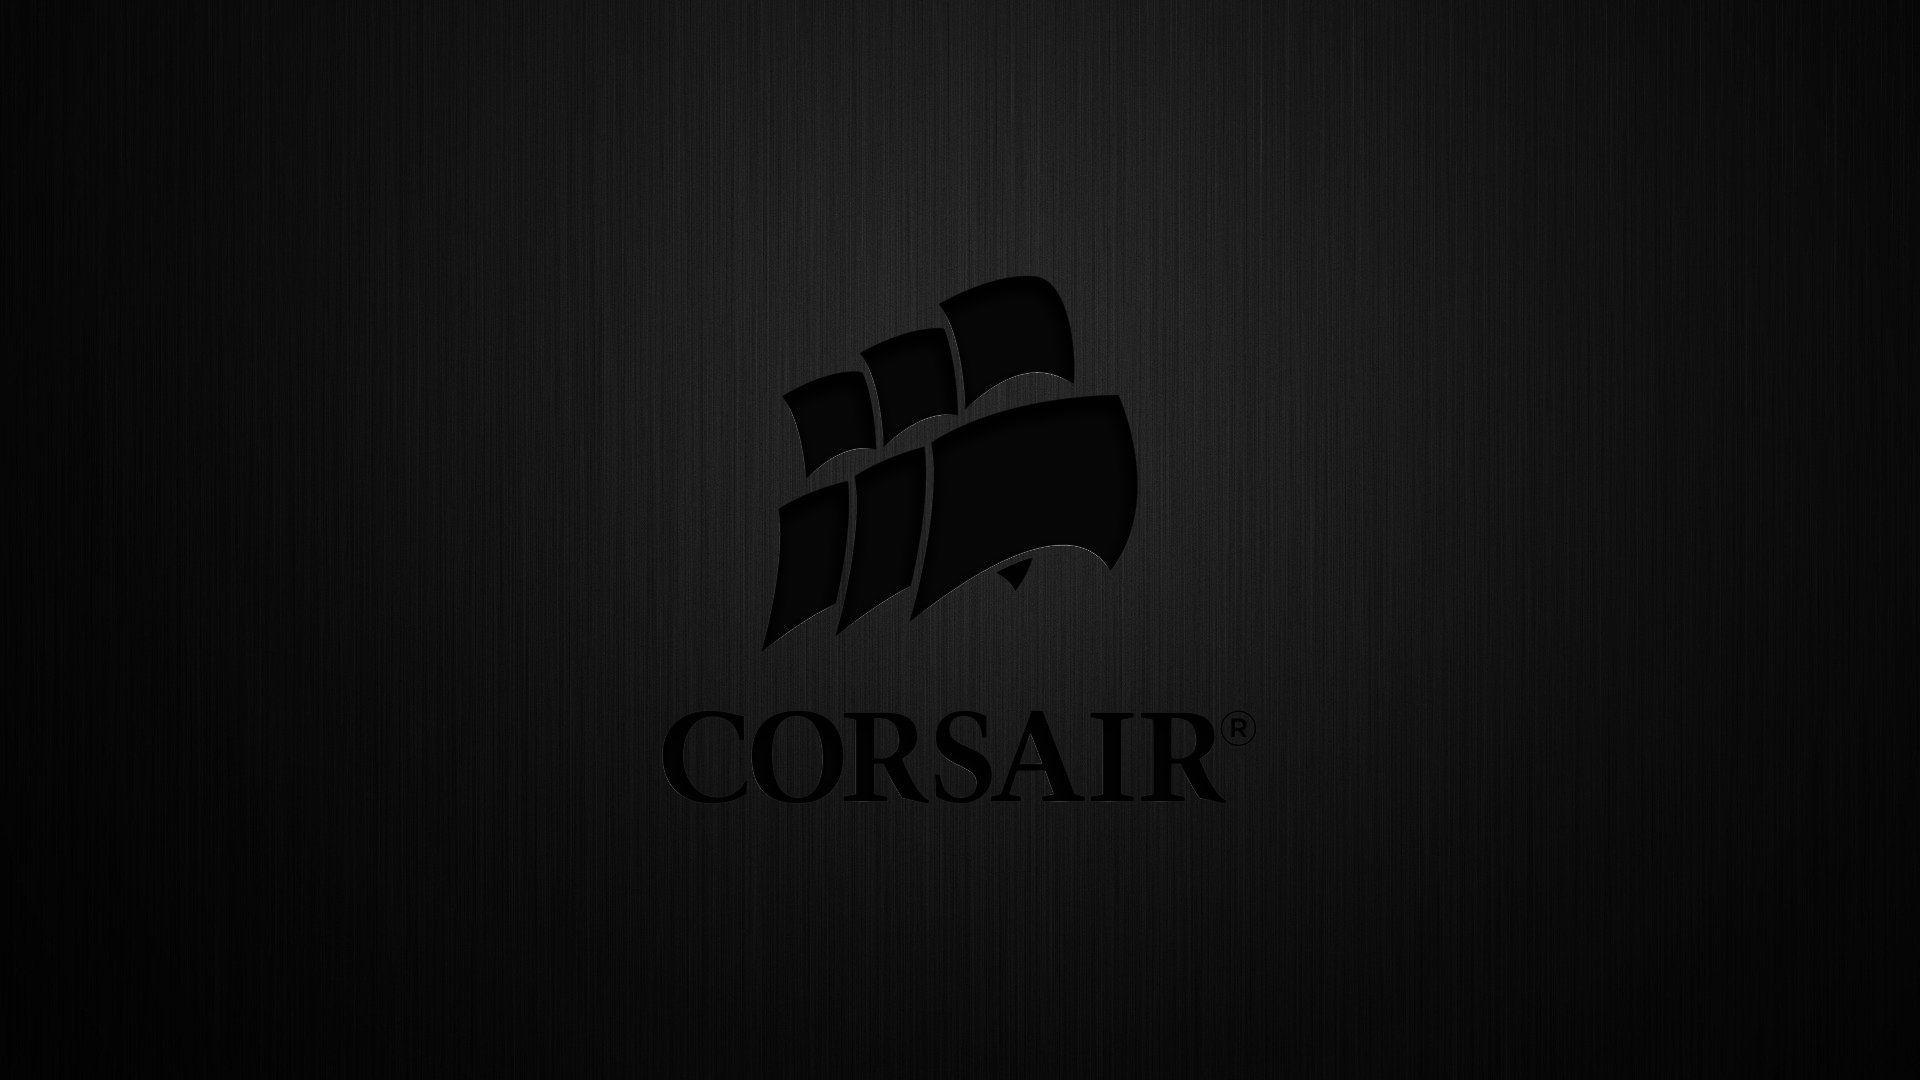 4k Corsair Wallpapers Top Free 4k Corsair Backgrounds Wallpaperaccess